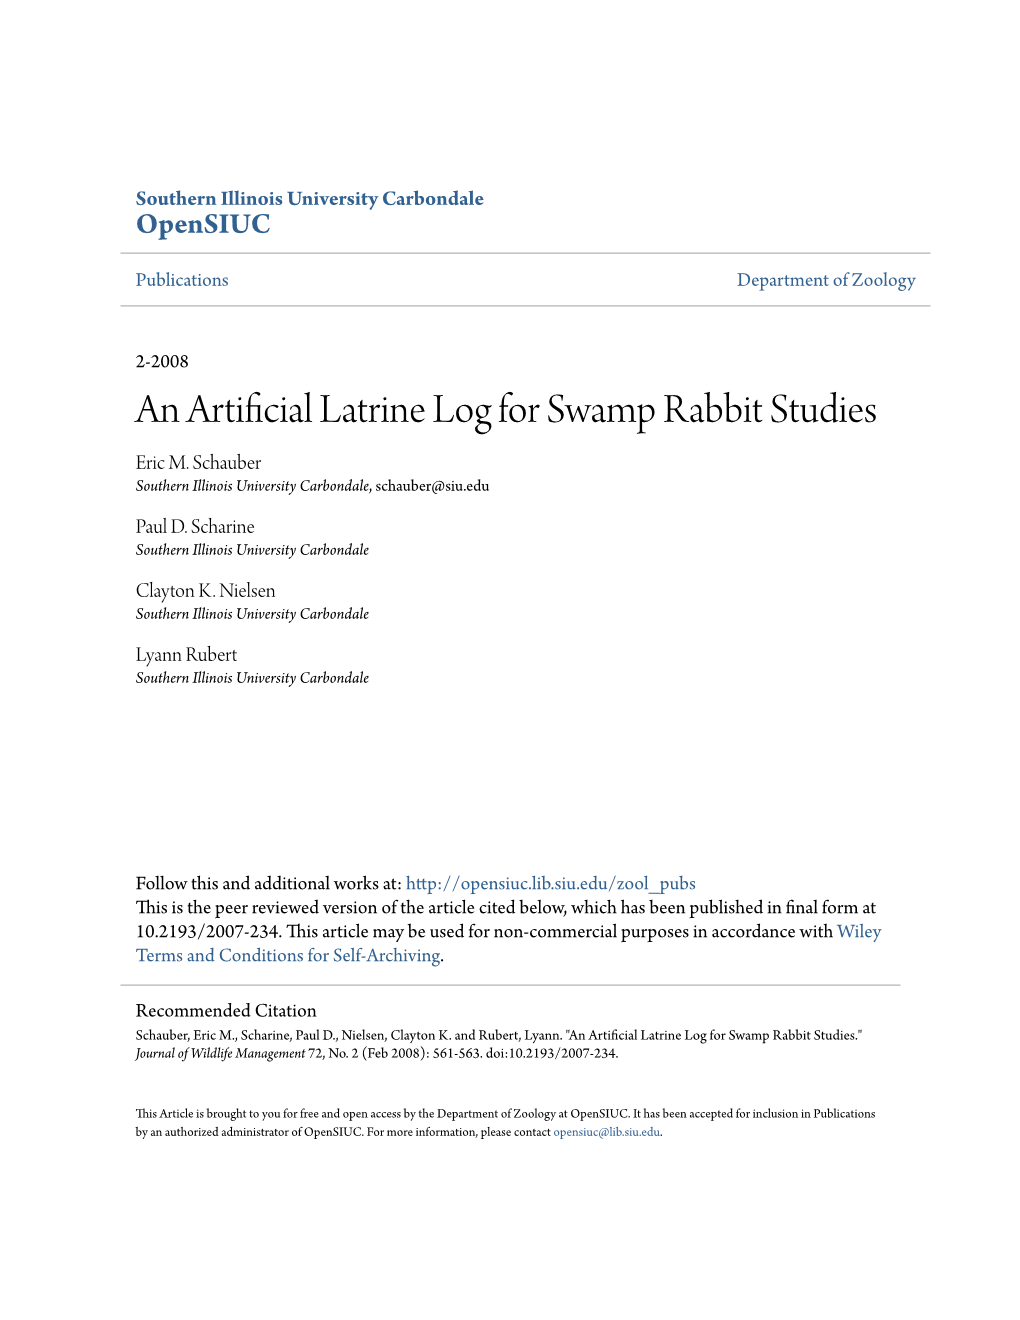 An Artificial Latrine Log for Swamp Rabbit Studies Eric M